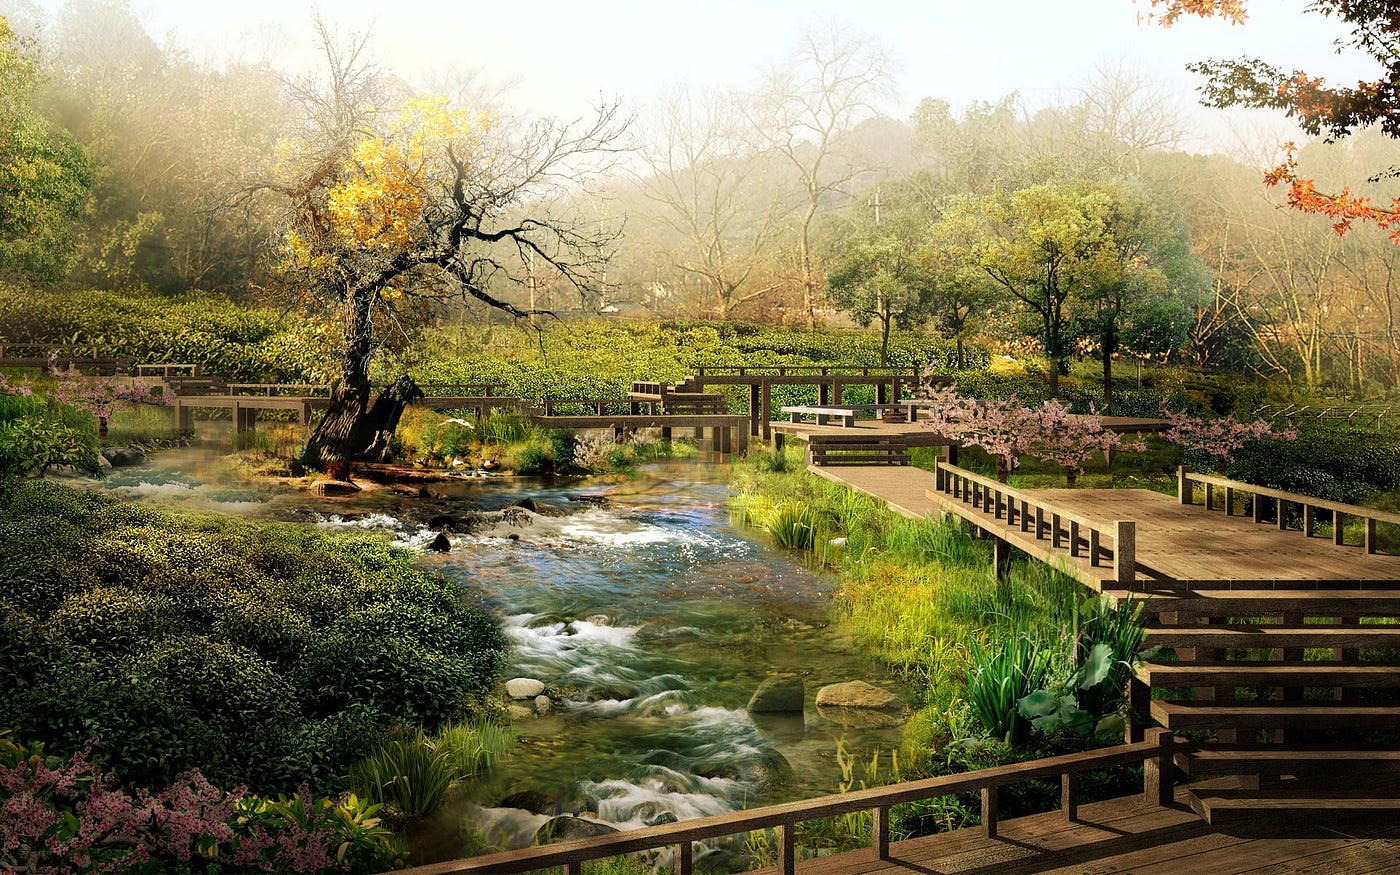 Create Your Own Zen Garden: Why and How To - National Garden Bureau